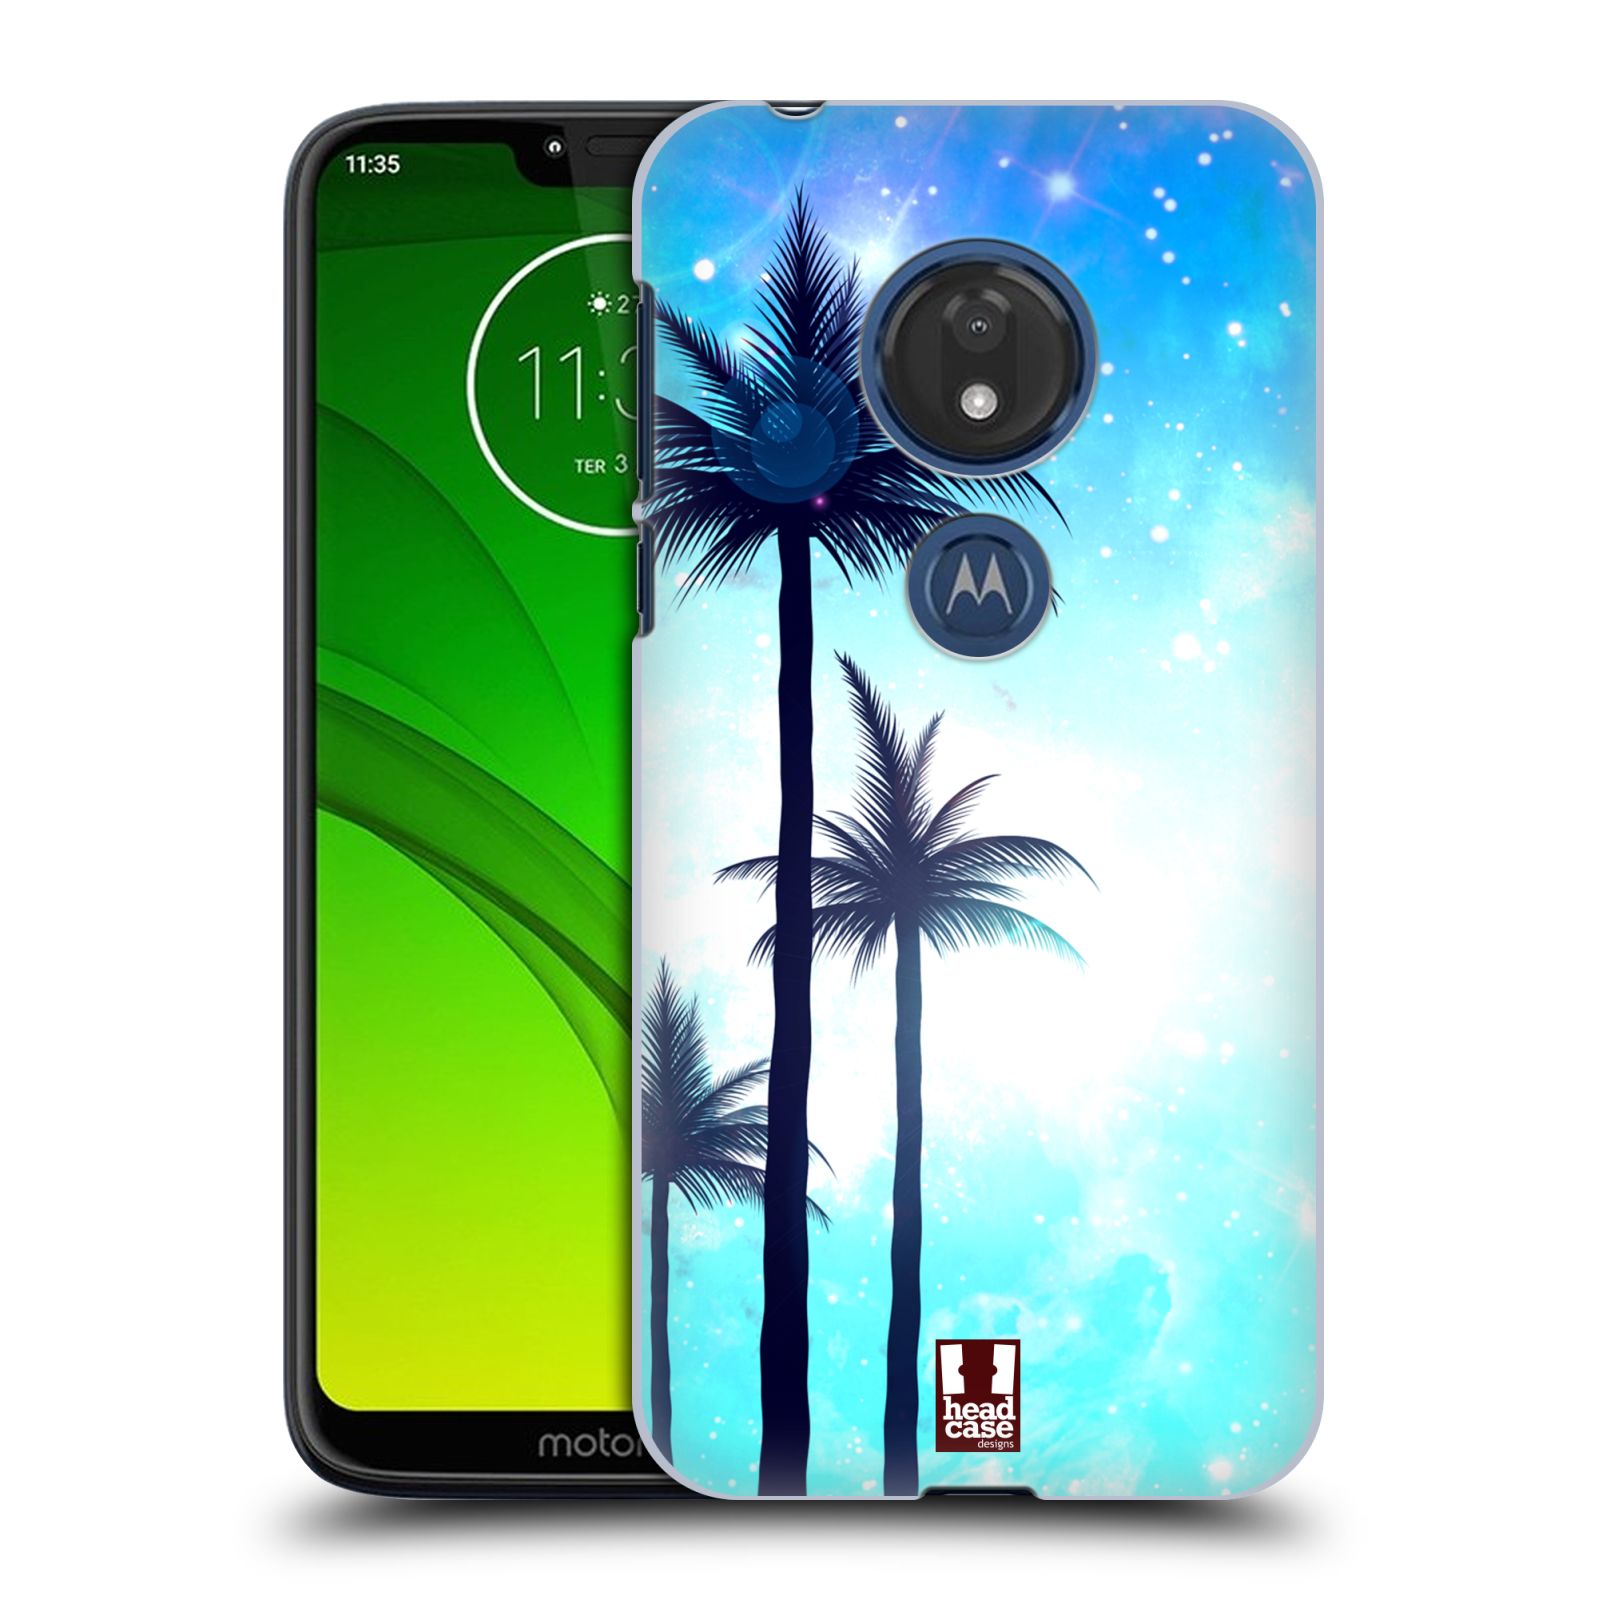 Pouzdro na mobil Motorola Moto G7 Play vzor Kreslený motiv silueta moře a palmy MODRÁ